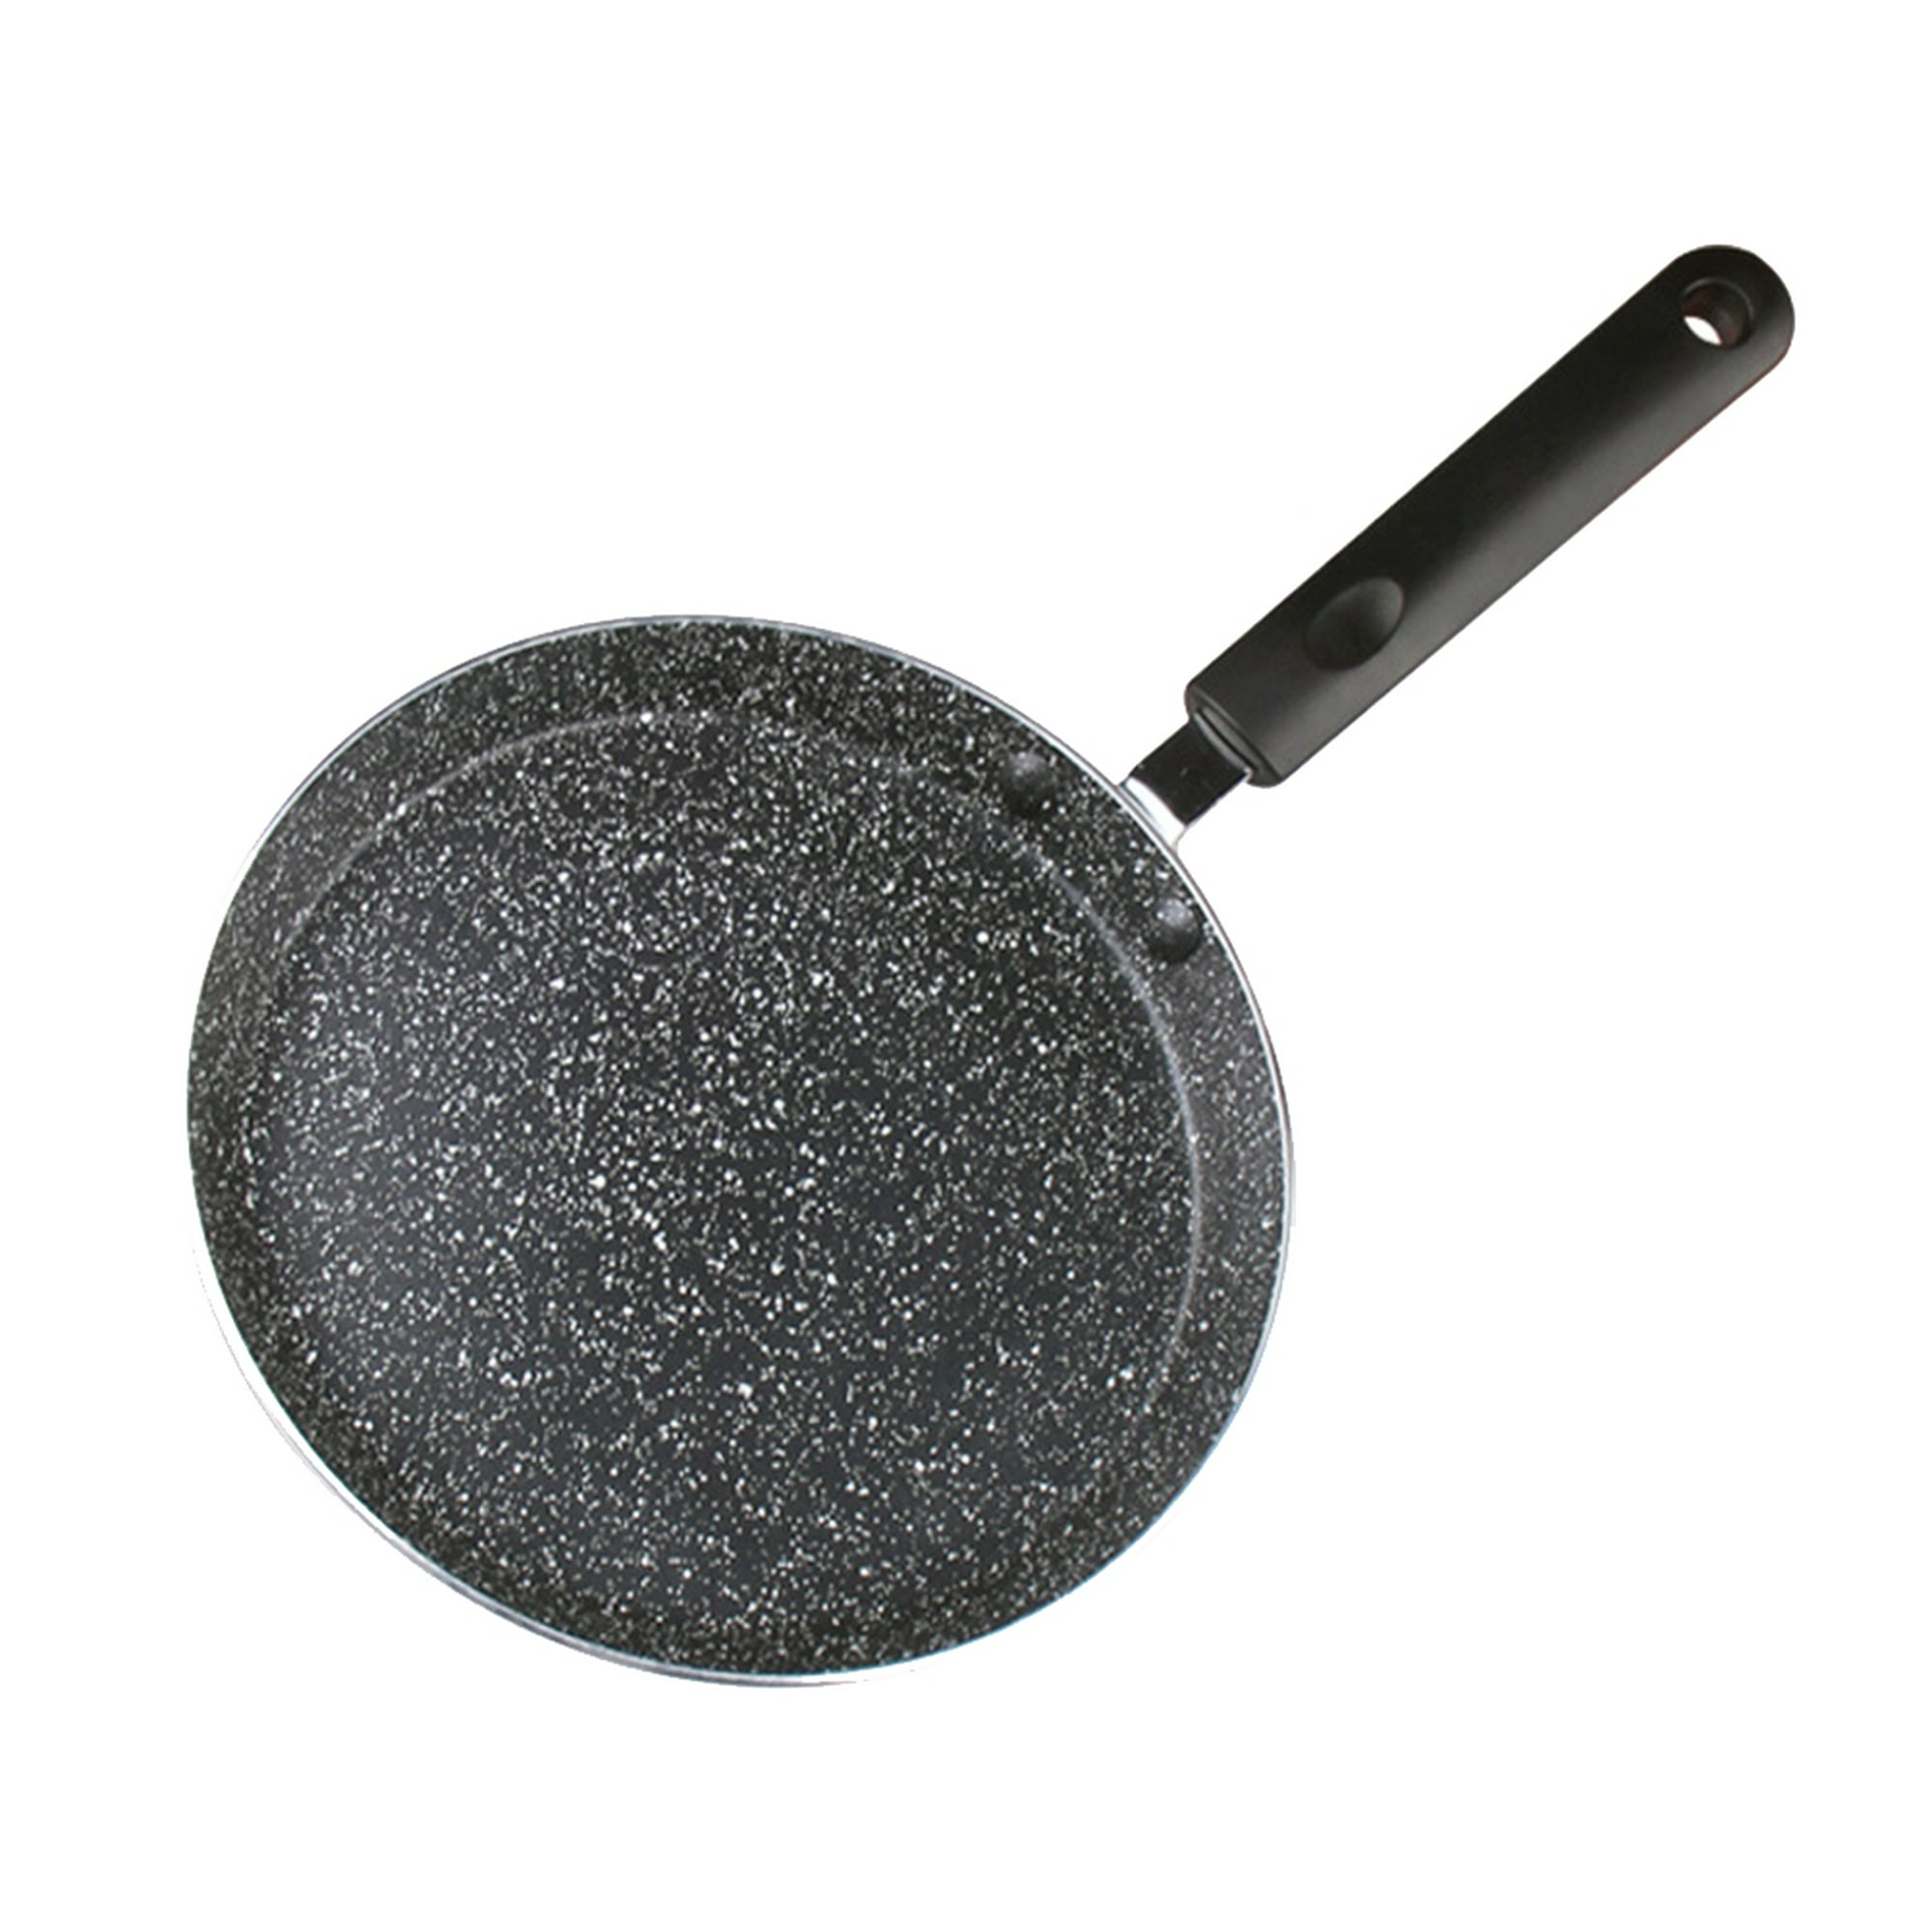 Sartén de inducción antiadherente de 20 cm, sartenes de piedra  antiadherentes, sartenes de inducción para tortillas (gris, 20 cm)